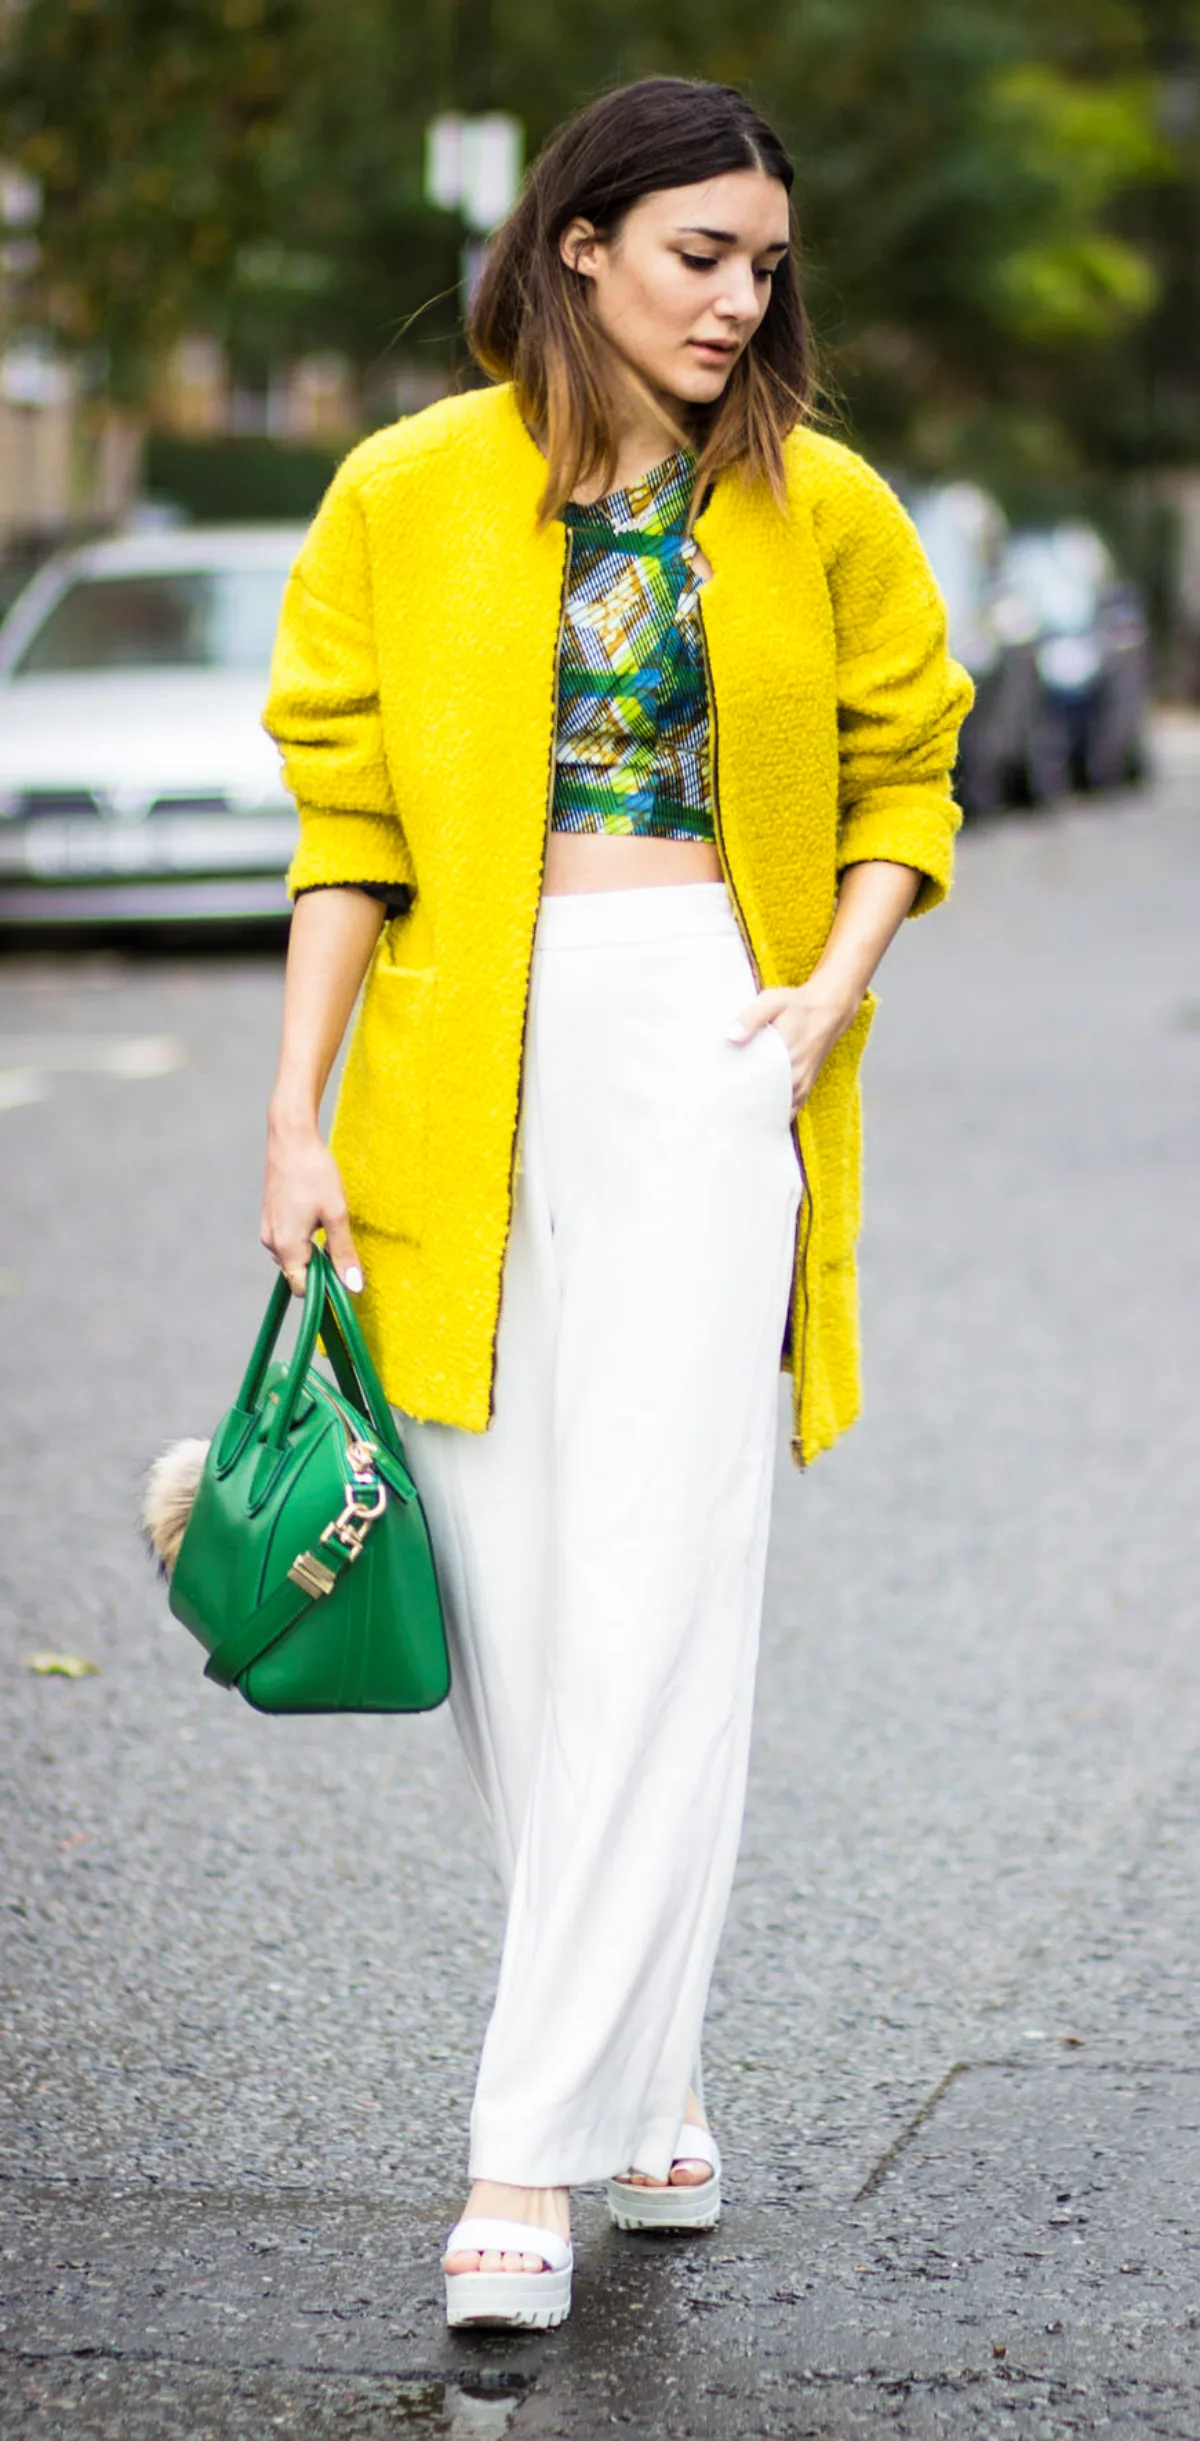 pantalon large blanc top en vert et jaune manteau jaune sac a main vert